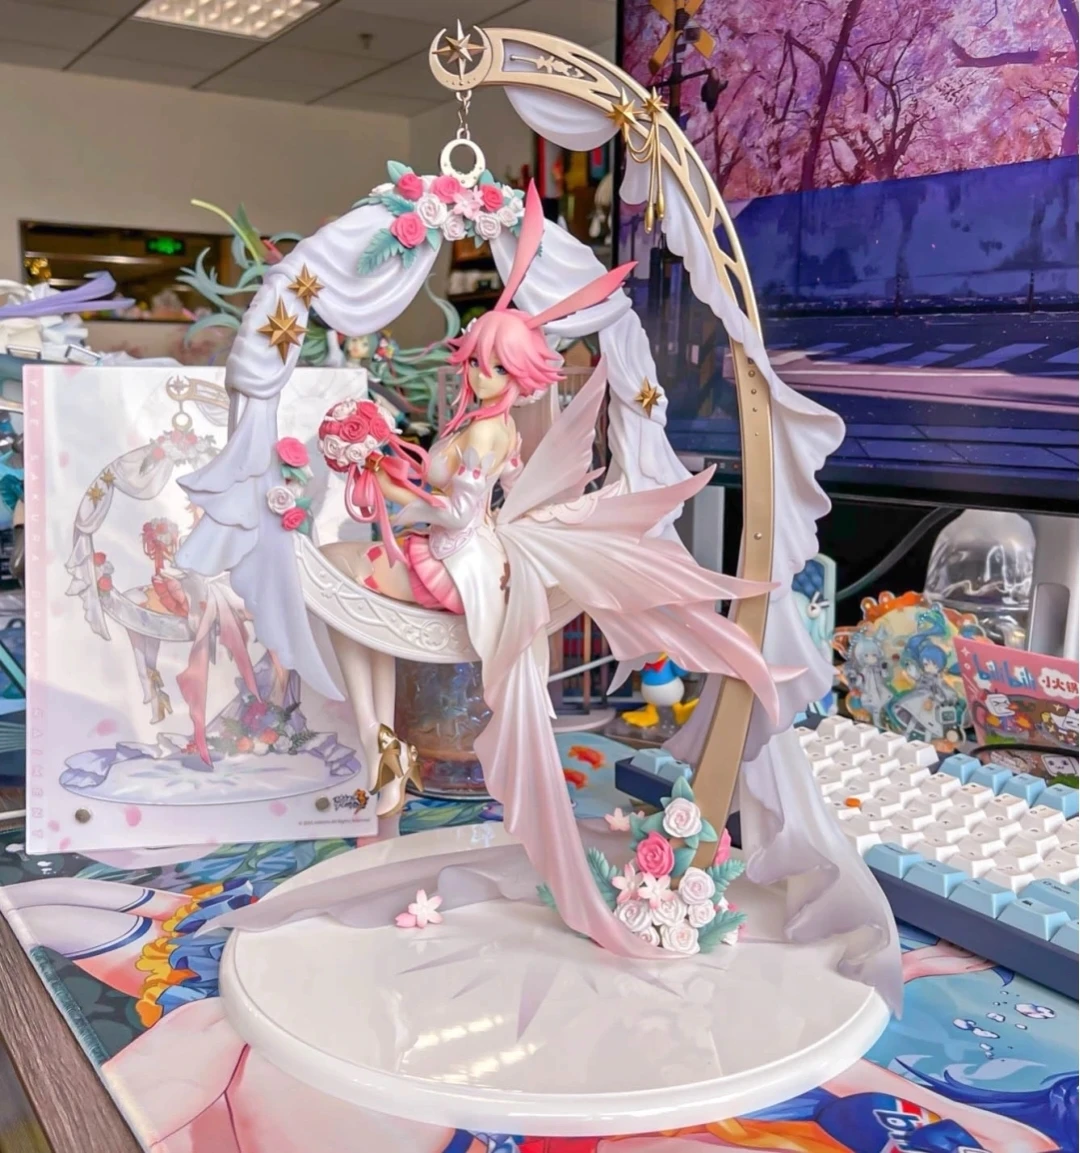 

Original:Honkai Impact 3 Yae Sakura Wedding Dress 38cm Pvc Action Figure Anime Figure Model Toy Figure Collection Doll Gift